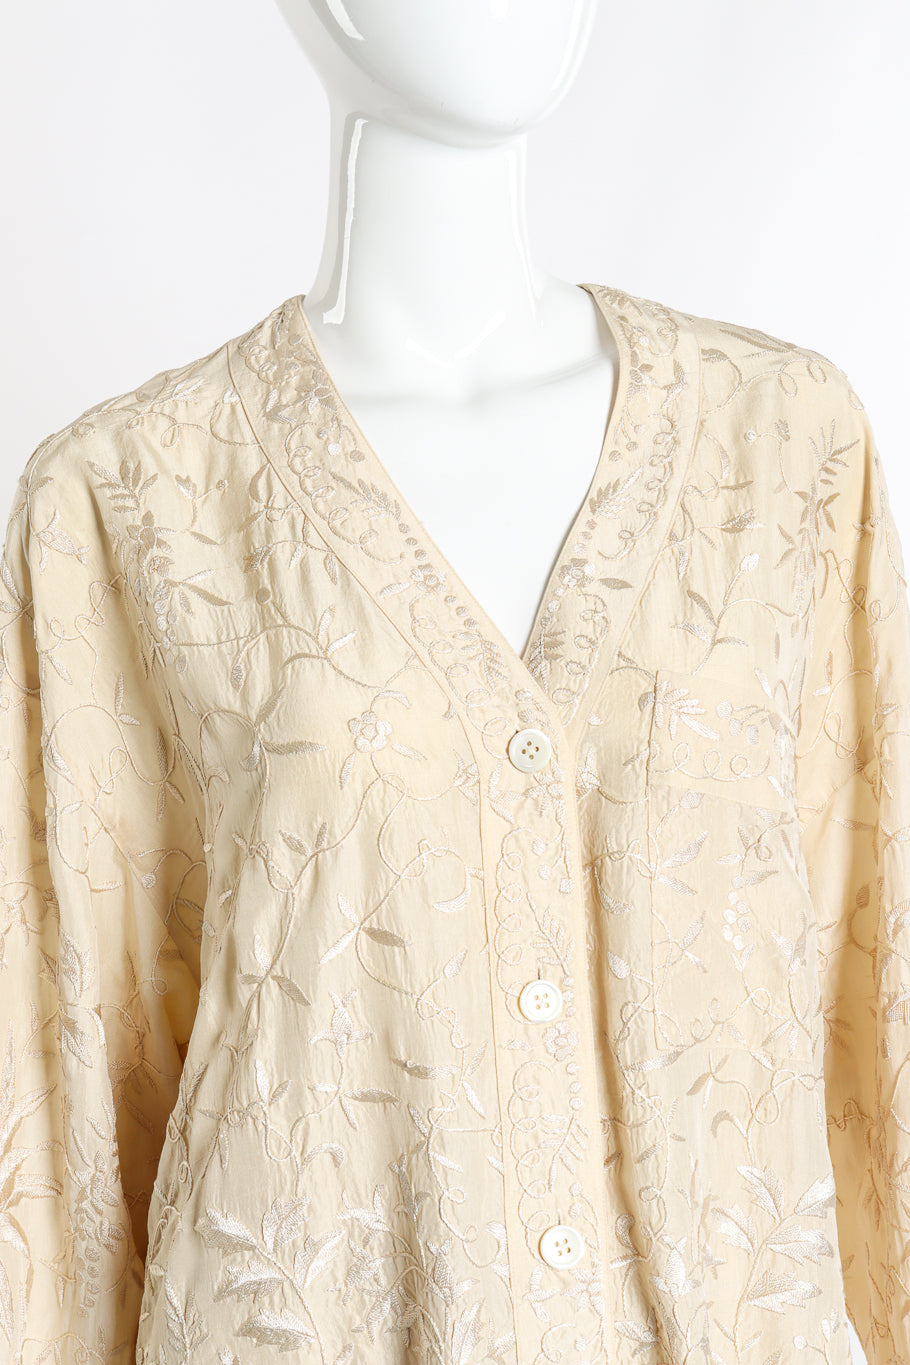 Vintage Donna Karan Embroidered Top & Pant Set front on mannequin closeup @recess la